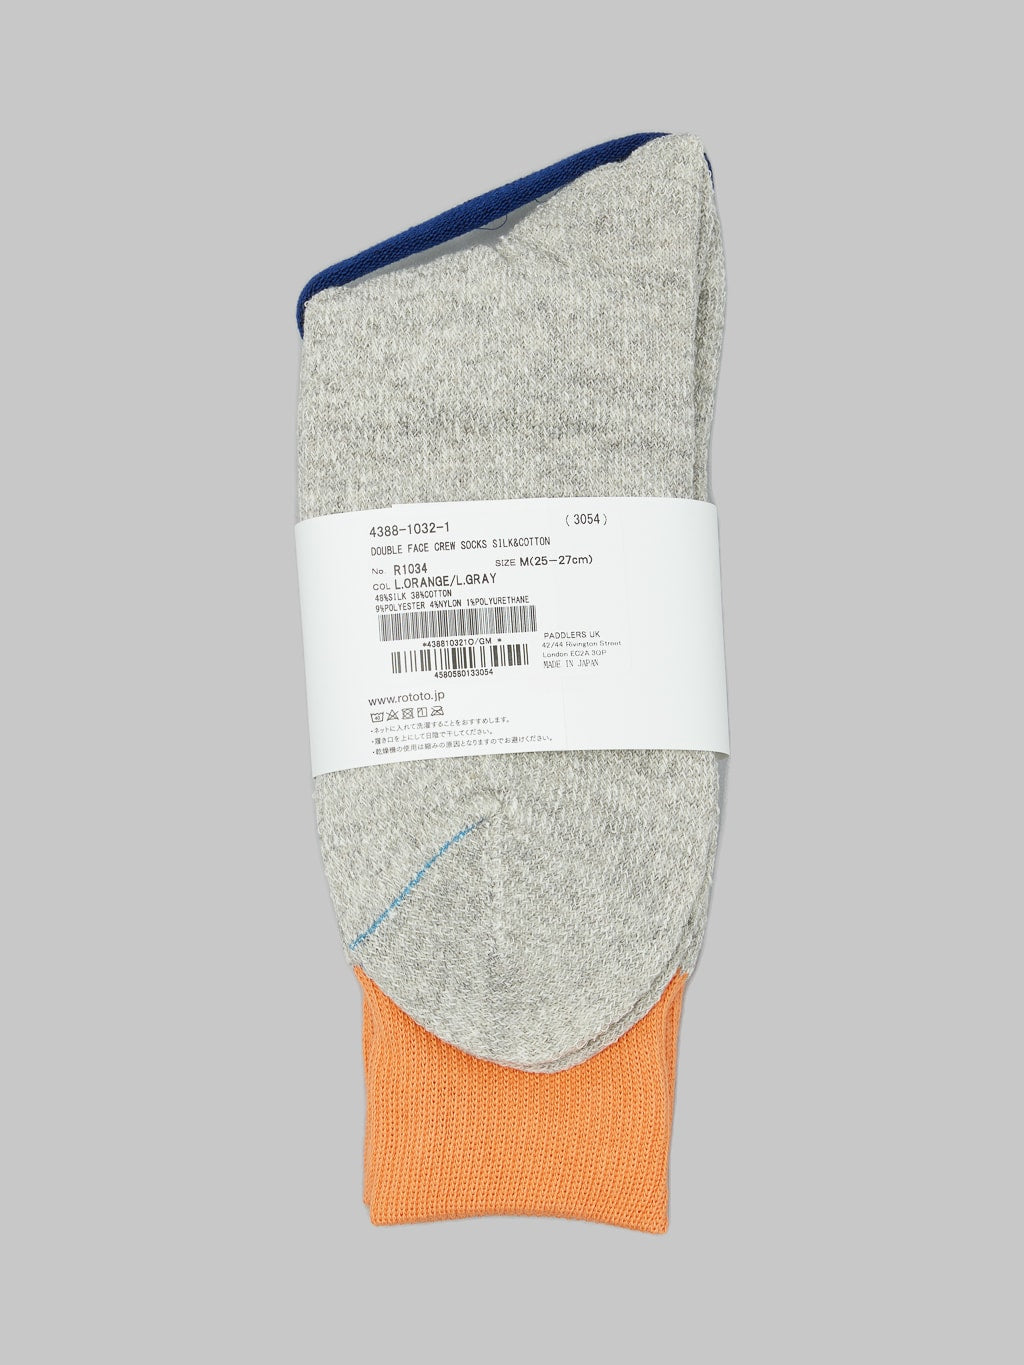 rototo double face crew socks silk cotton orange gray back label details